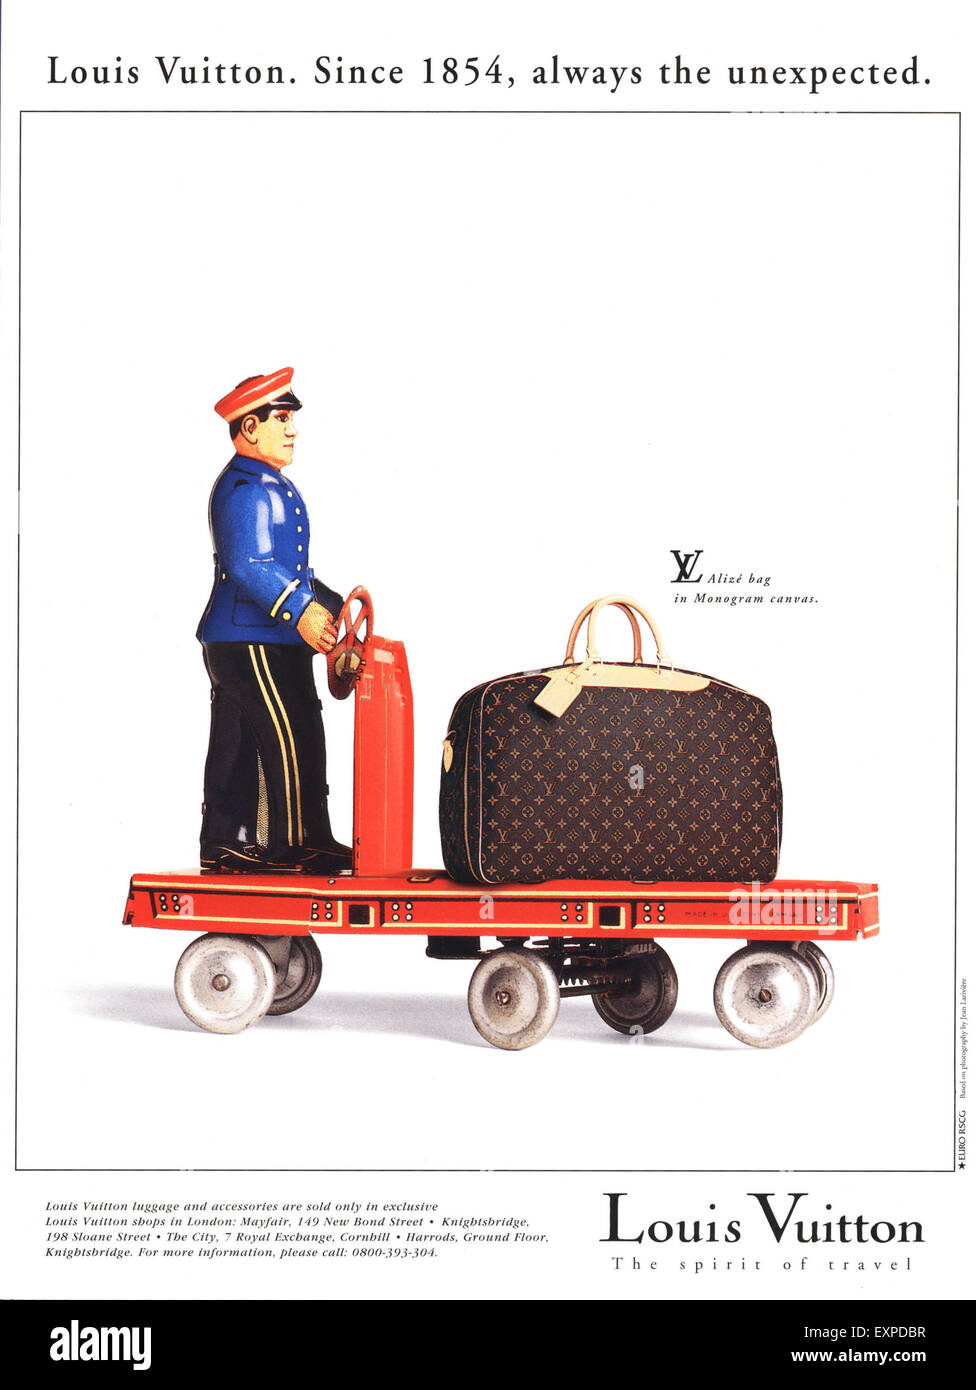 1990er Jahre UK Louis Vuitton Magazin Anzeige Stockfoto